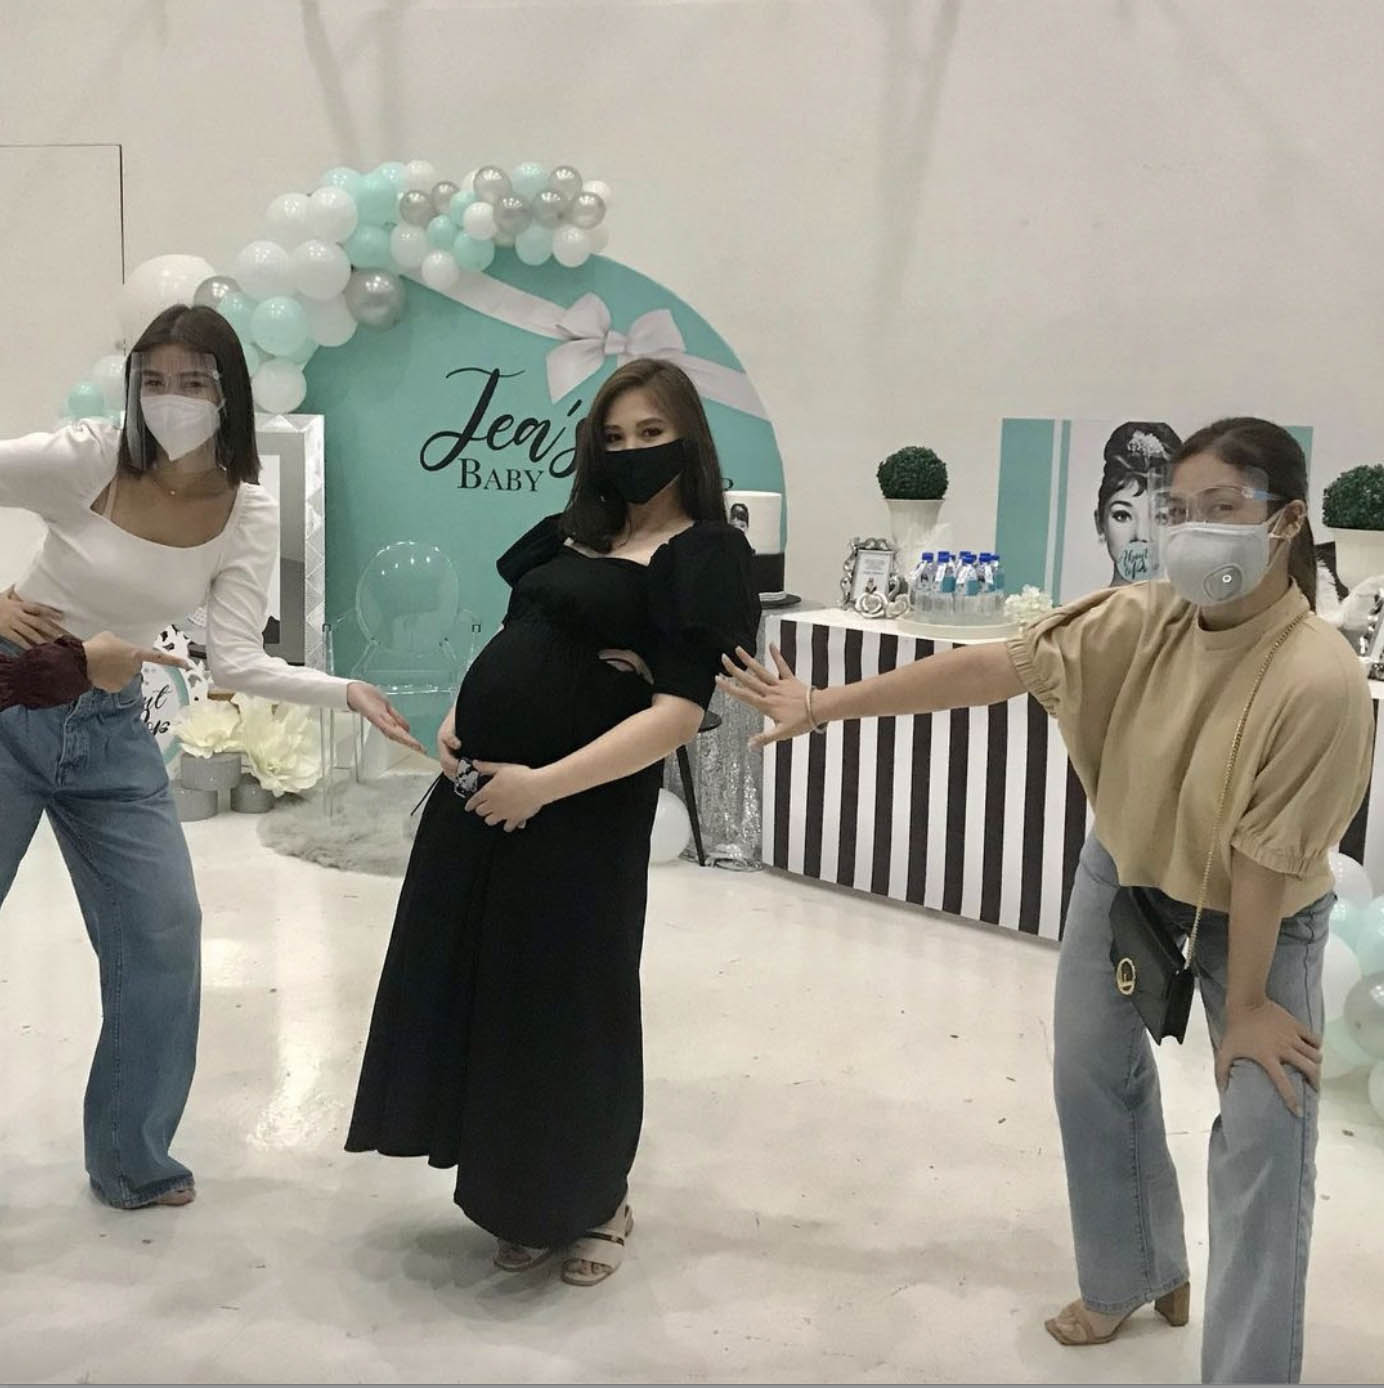 liza soberano organizes surprise baby shower for janella salvador